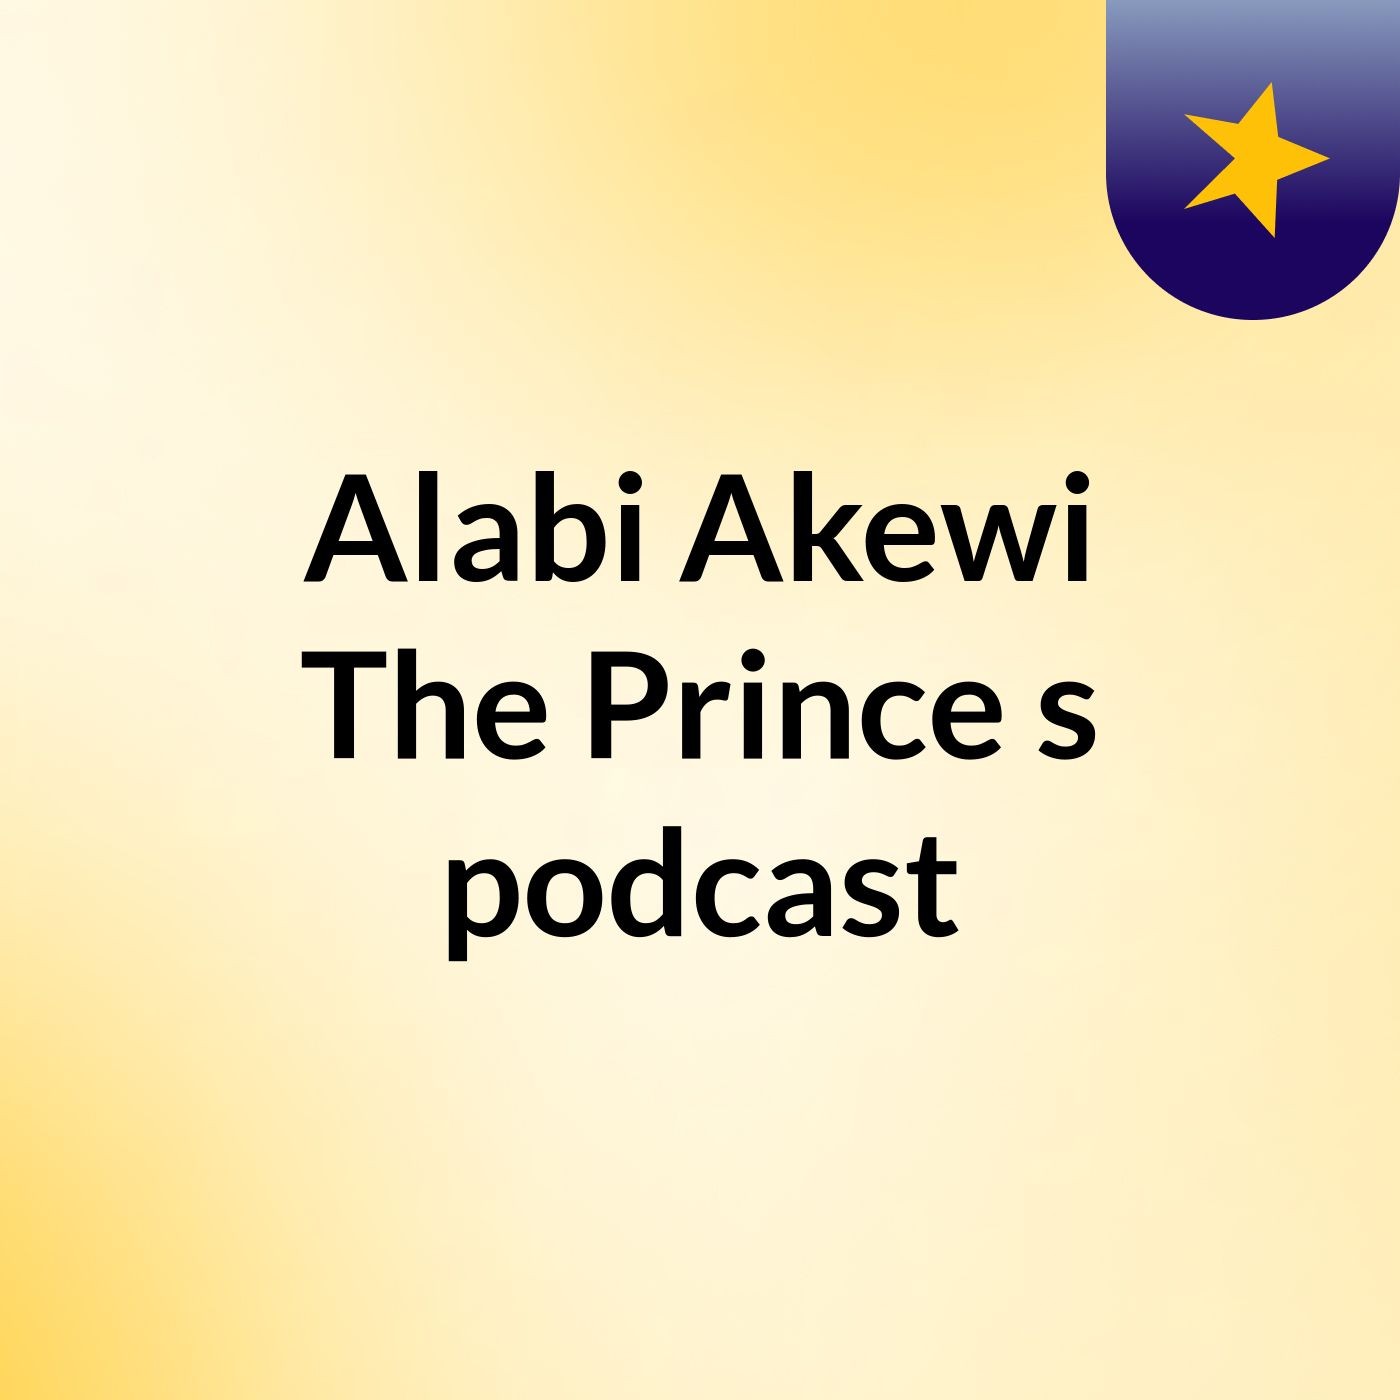 Alabi Akewi The Prince's podcast